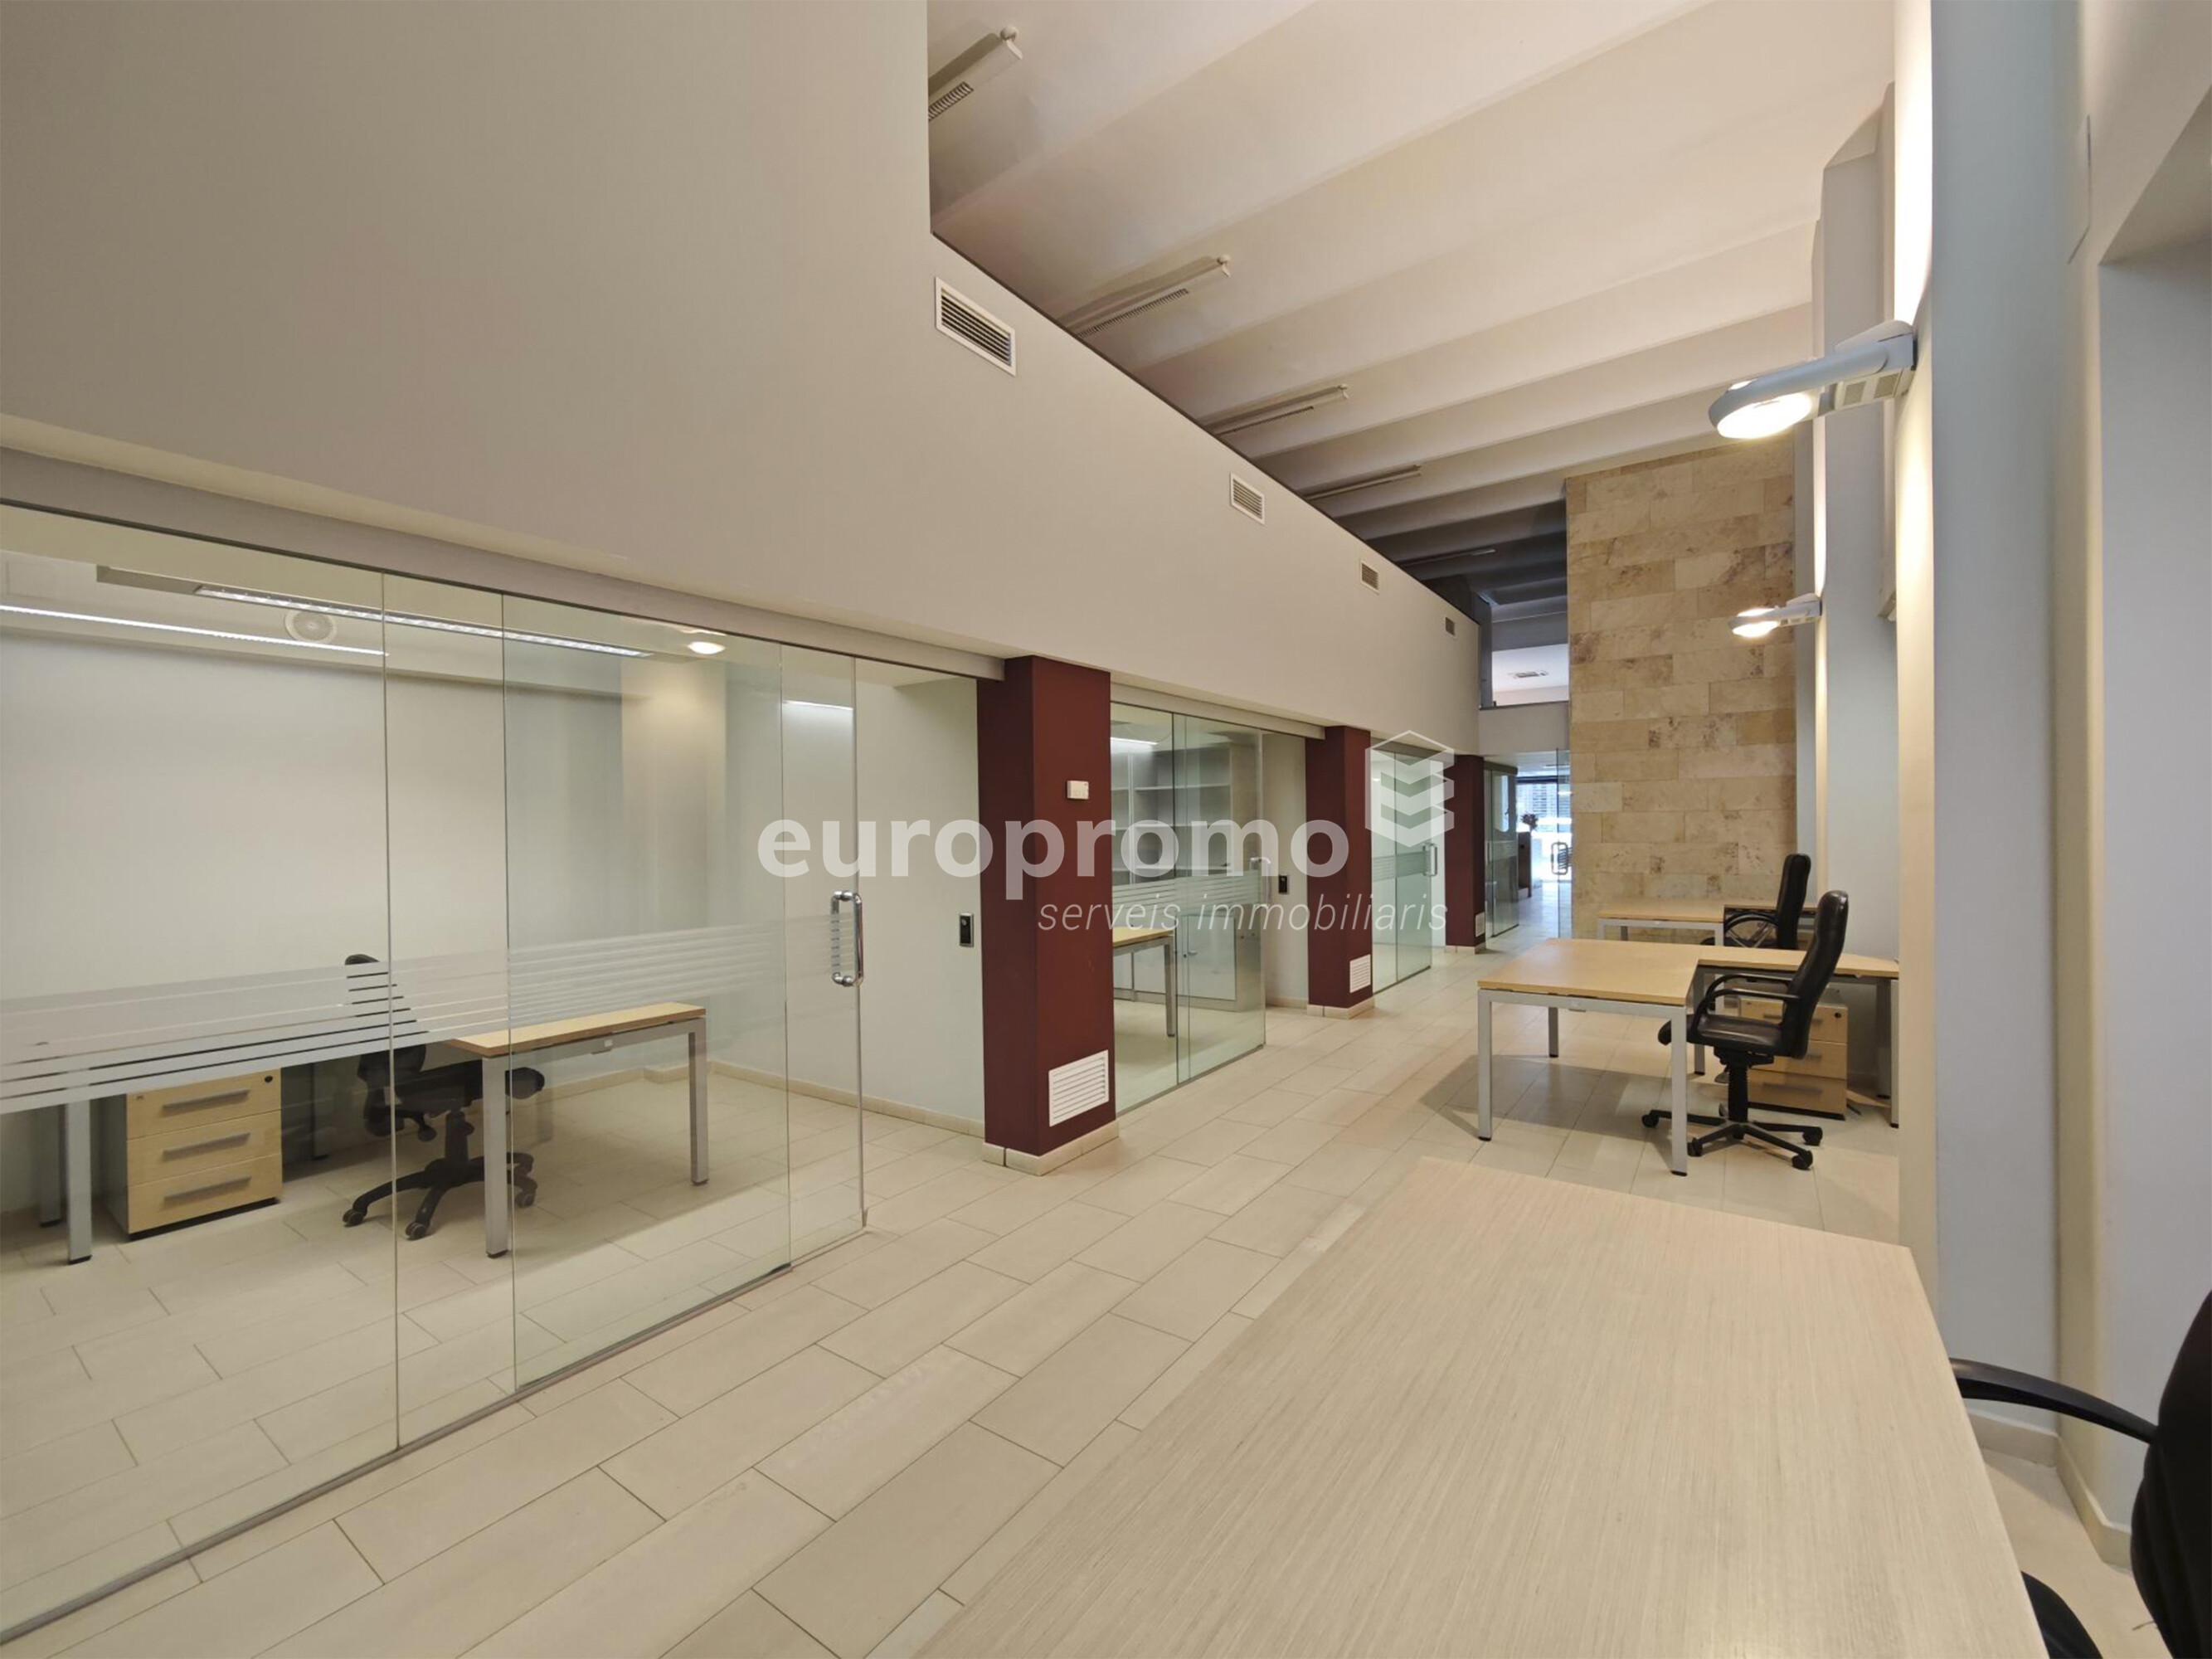 Oficina de 400m2 distribuida en dues plantes, situada al centre de Girona!